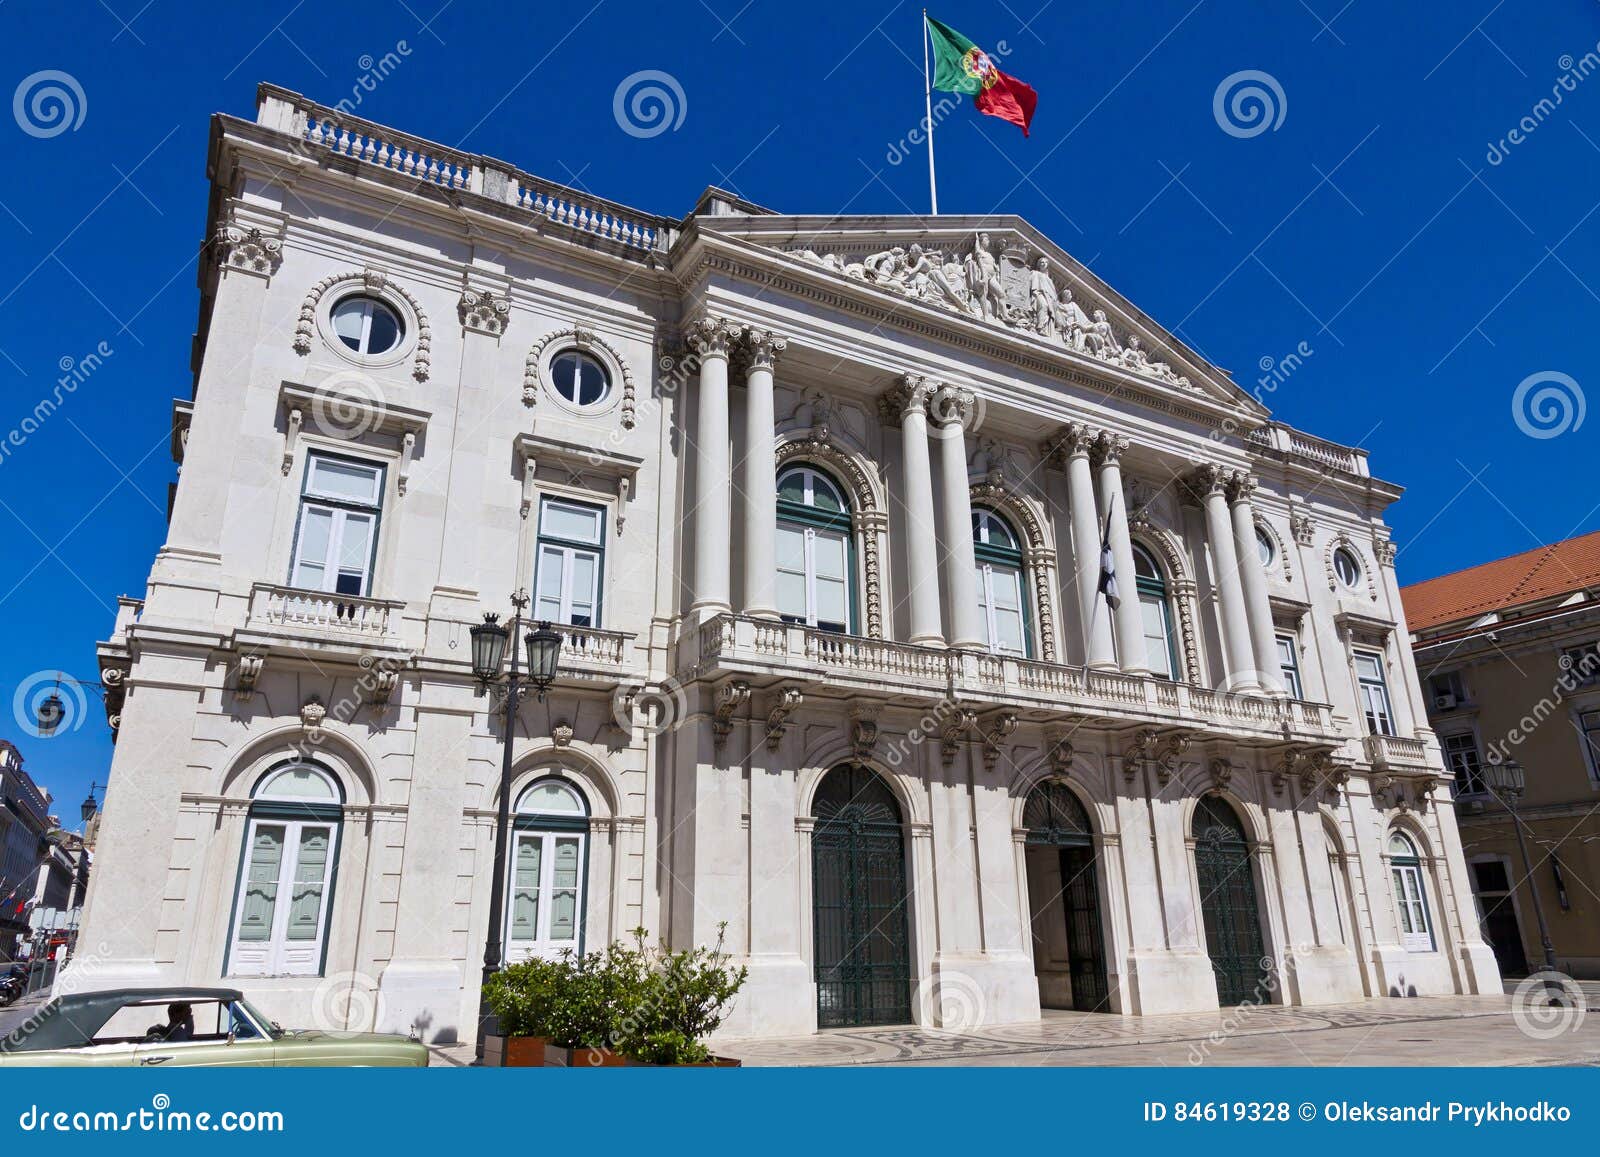 city hall building camara municipal in lisbon, portugal